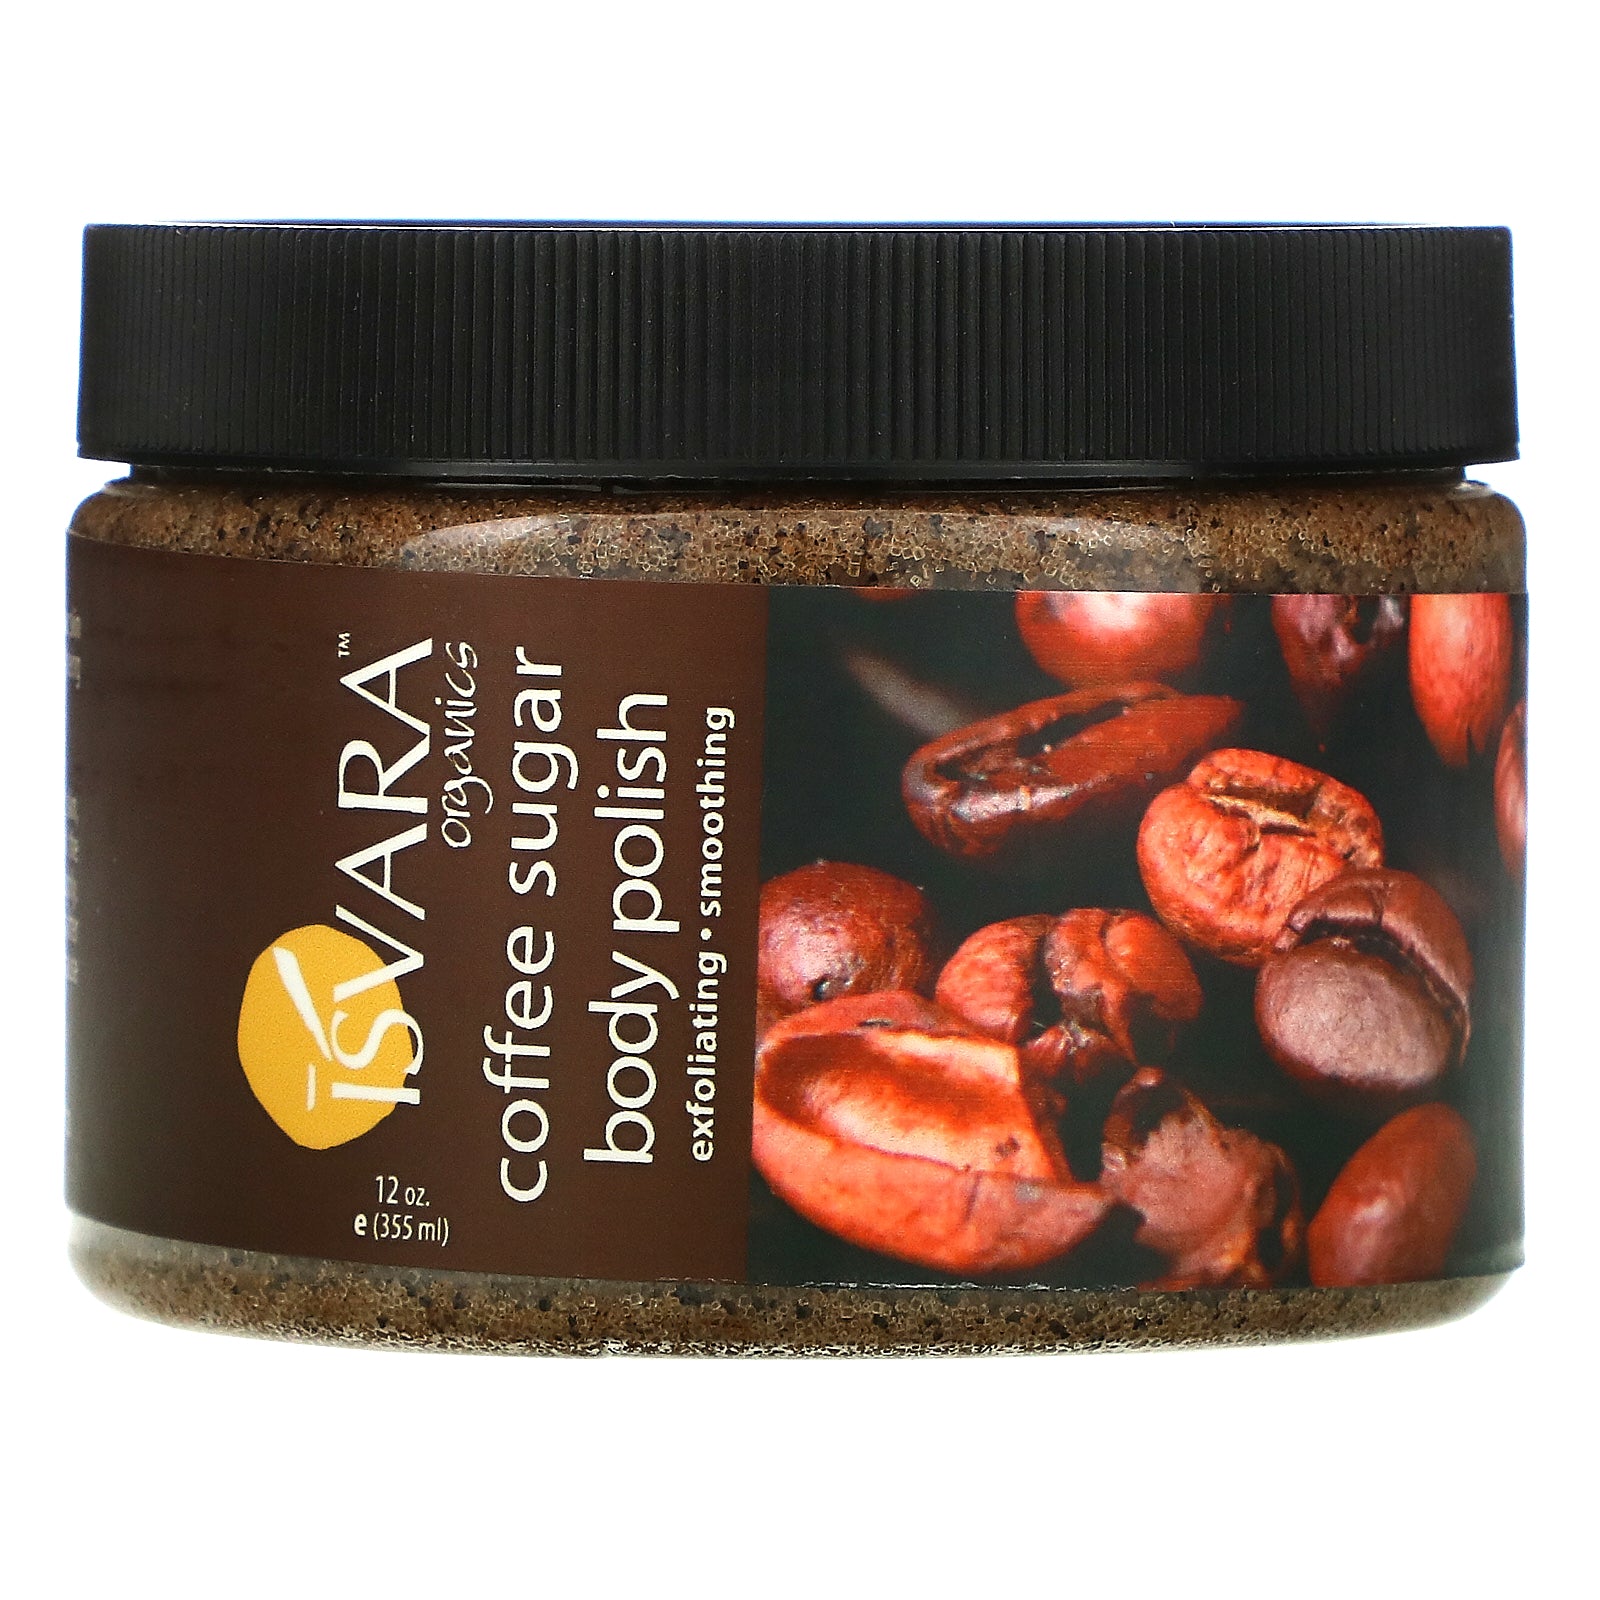 Isvara Organics, Coffee Sugar Body Polish, 12 oz (355 ml)